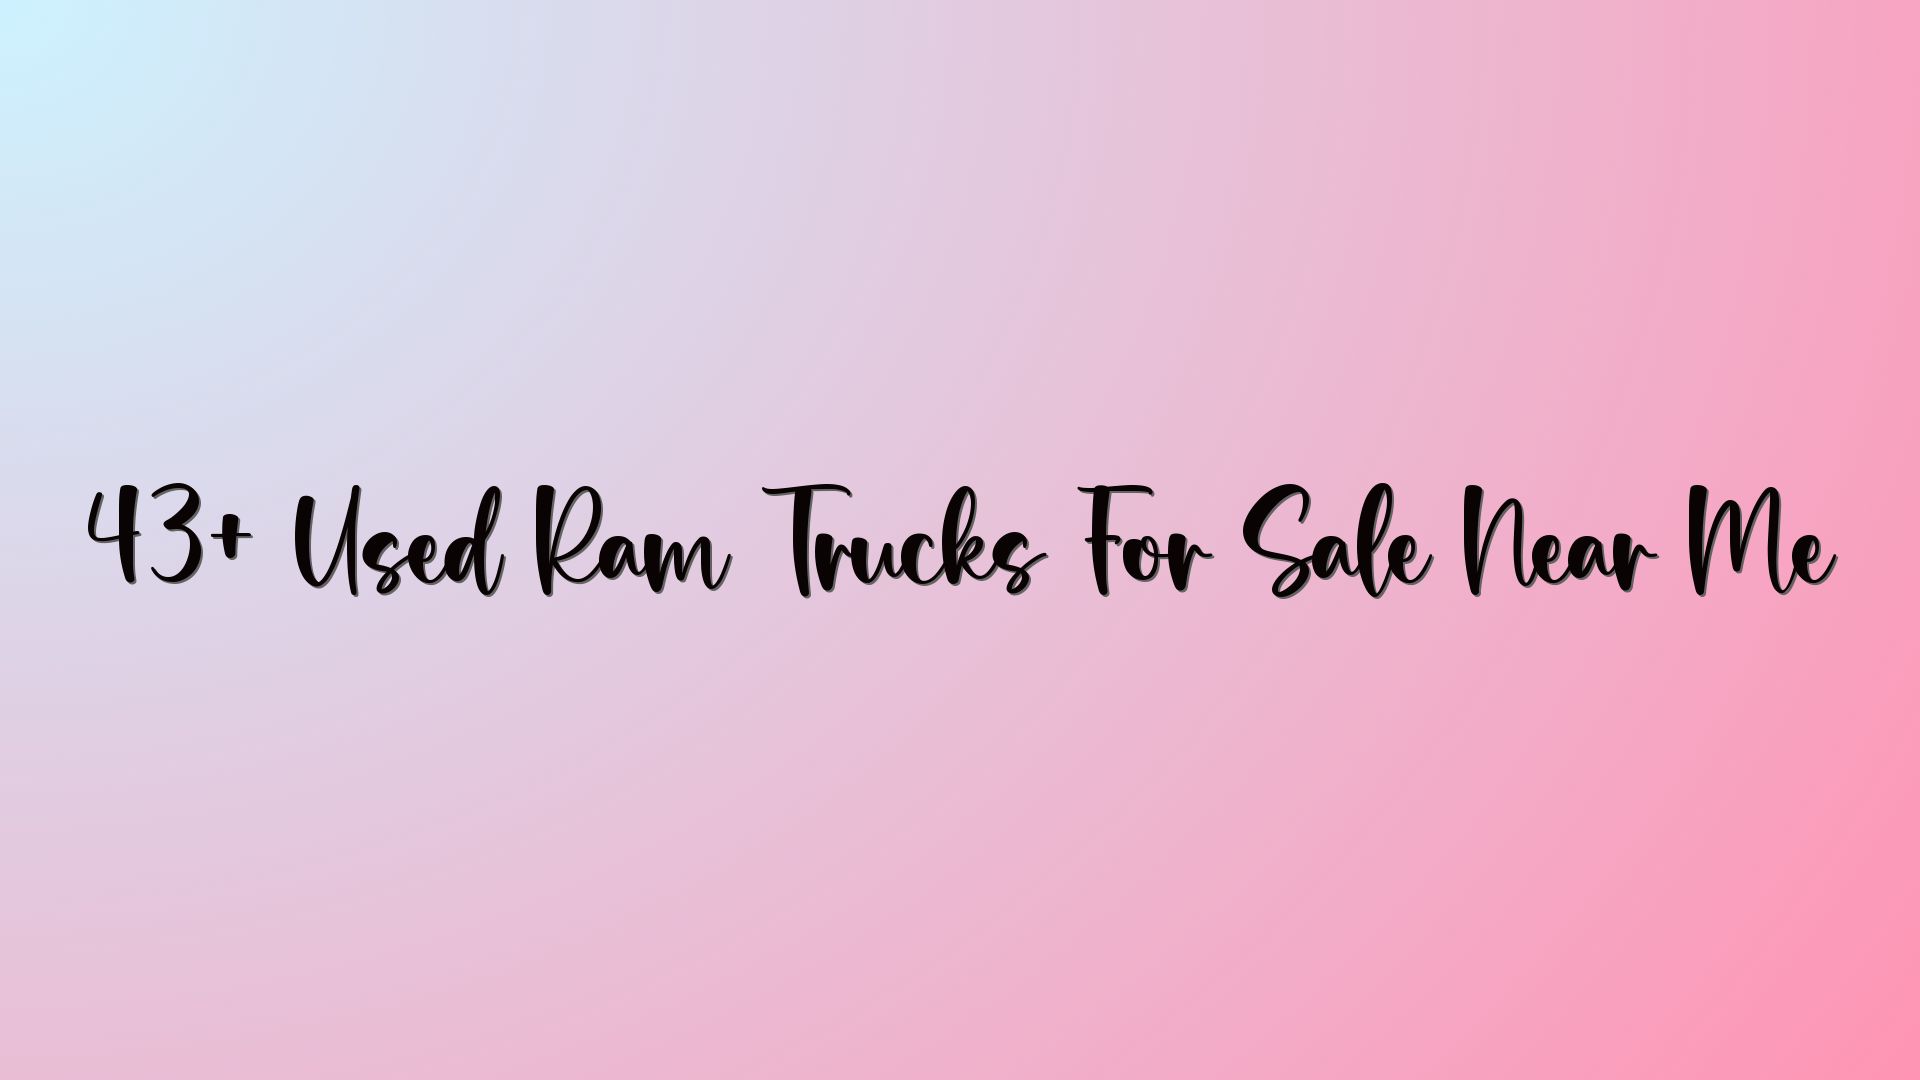 43+ Used Ram Trucks For Sale Near Me